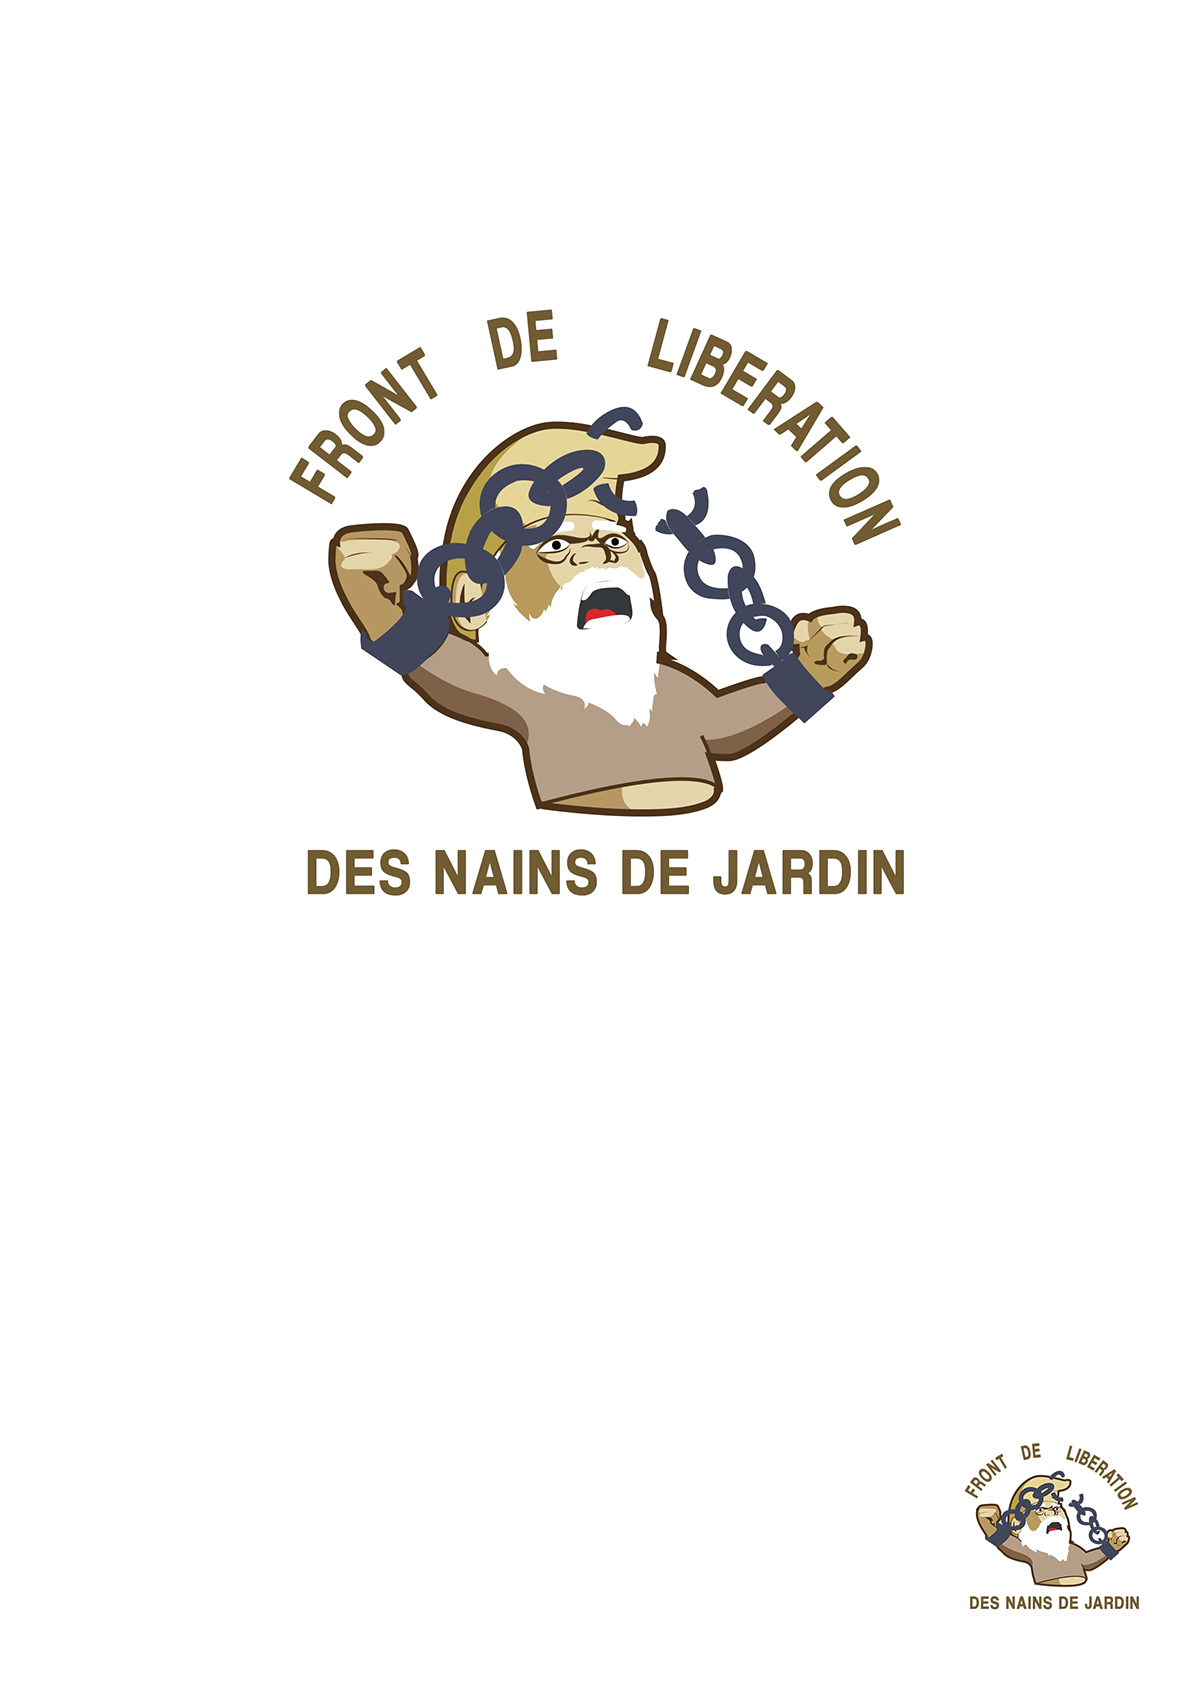 logo caserne art mag sandwich vintage graphic design cool dauphin lezard La Terre gorille Chat felin